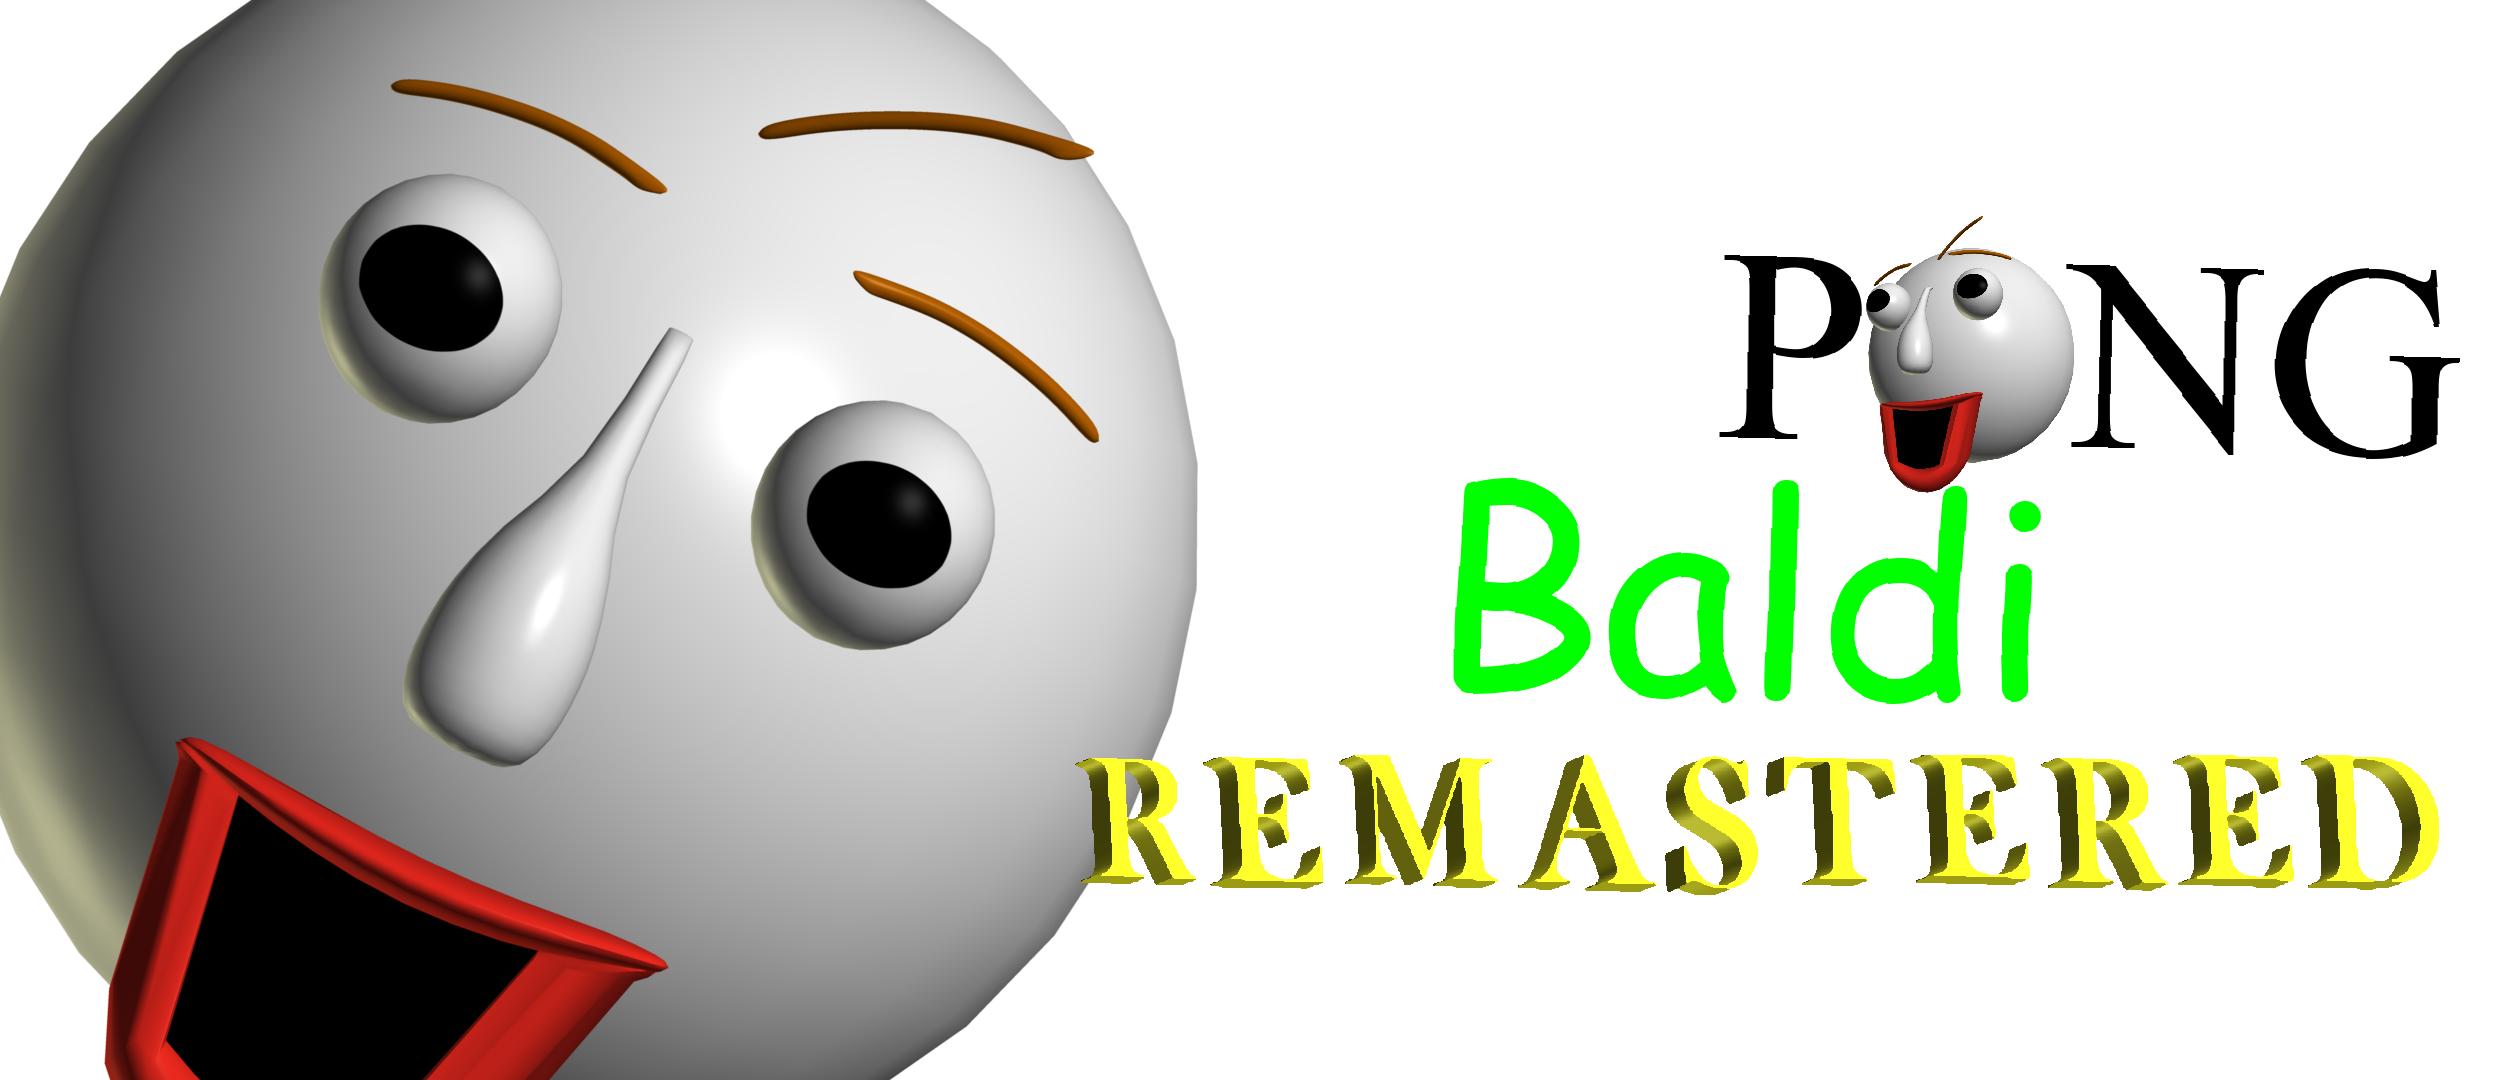 Ping Pong Baldi Remastered (Version 1.0.0.)